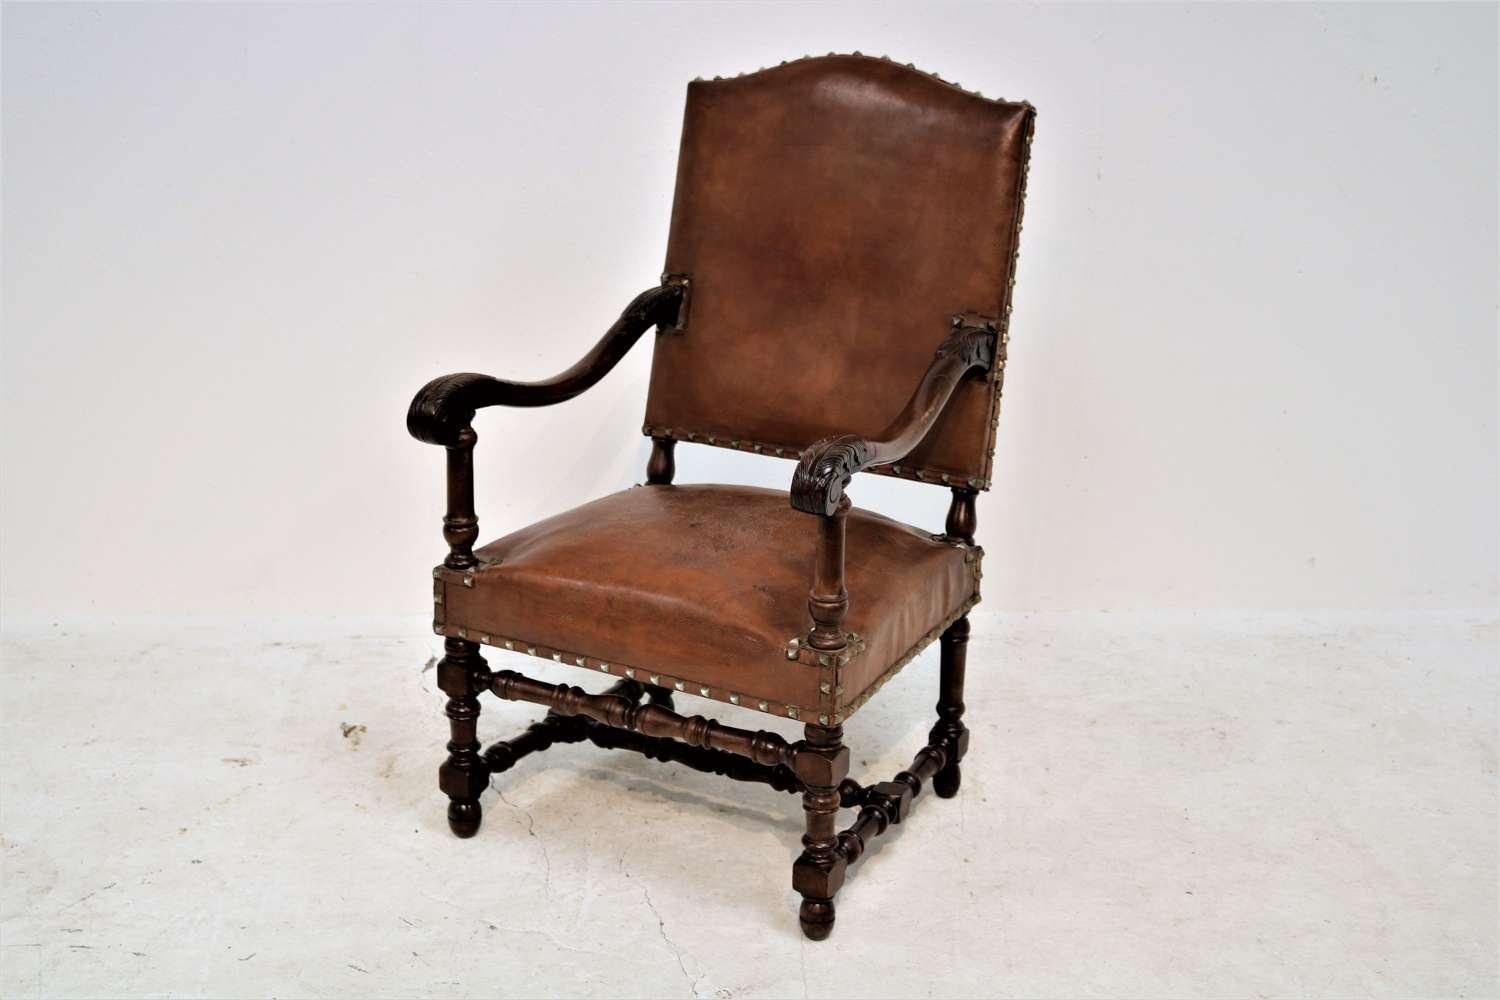 French 19th century walnut elbow chair (original leather)